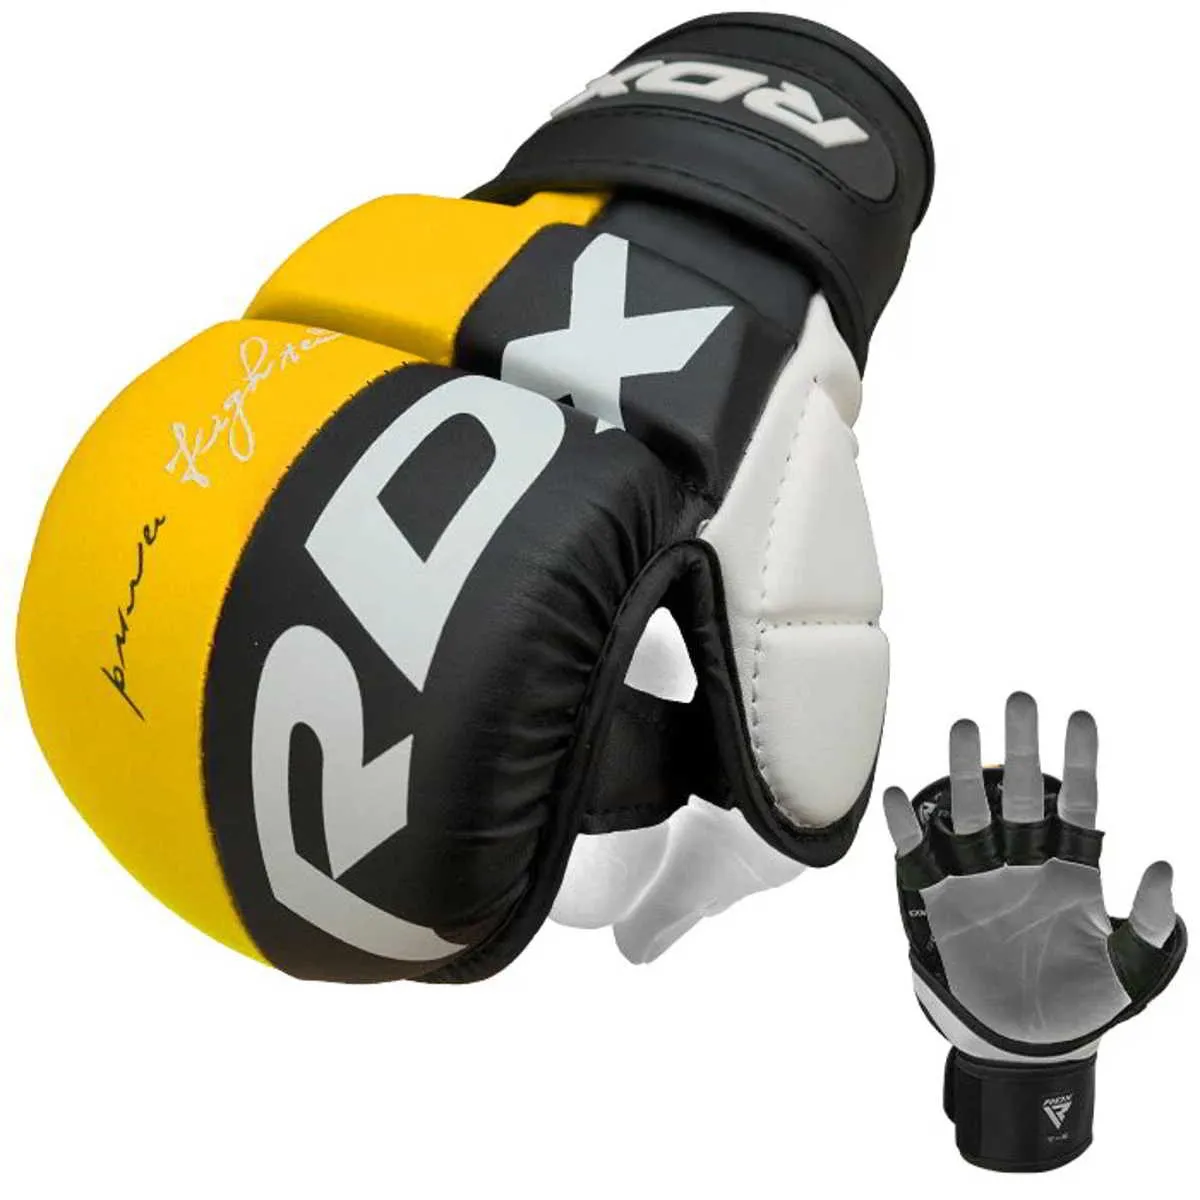 Gants MMA Sparring cuir synthétique jaune 7oz RDX T6